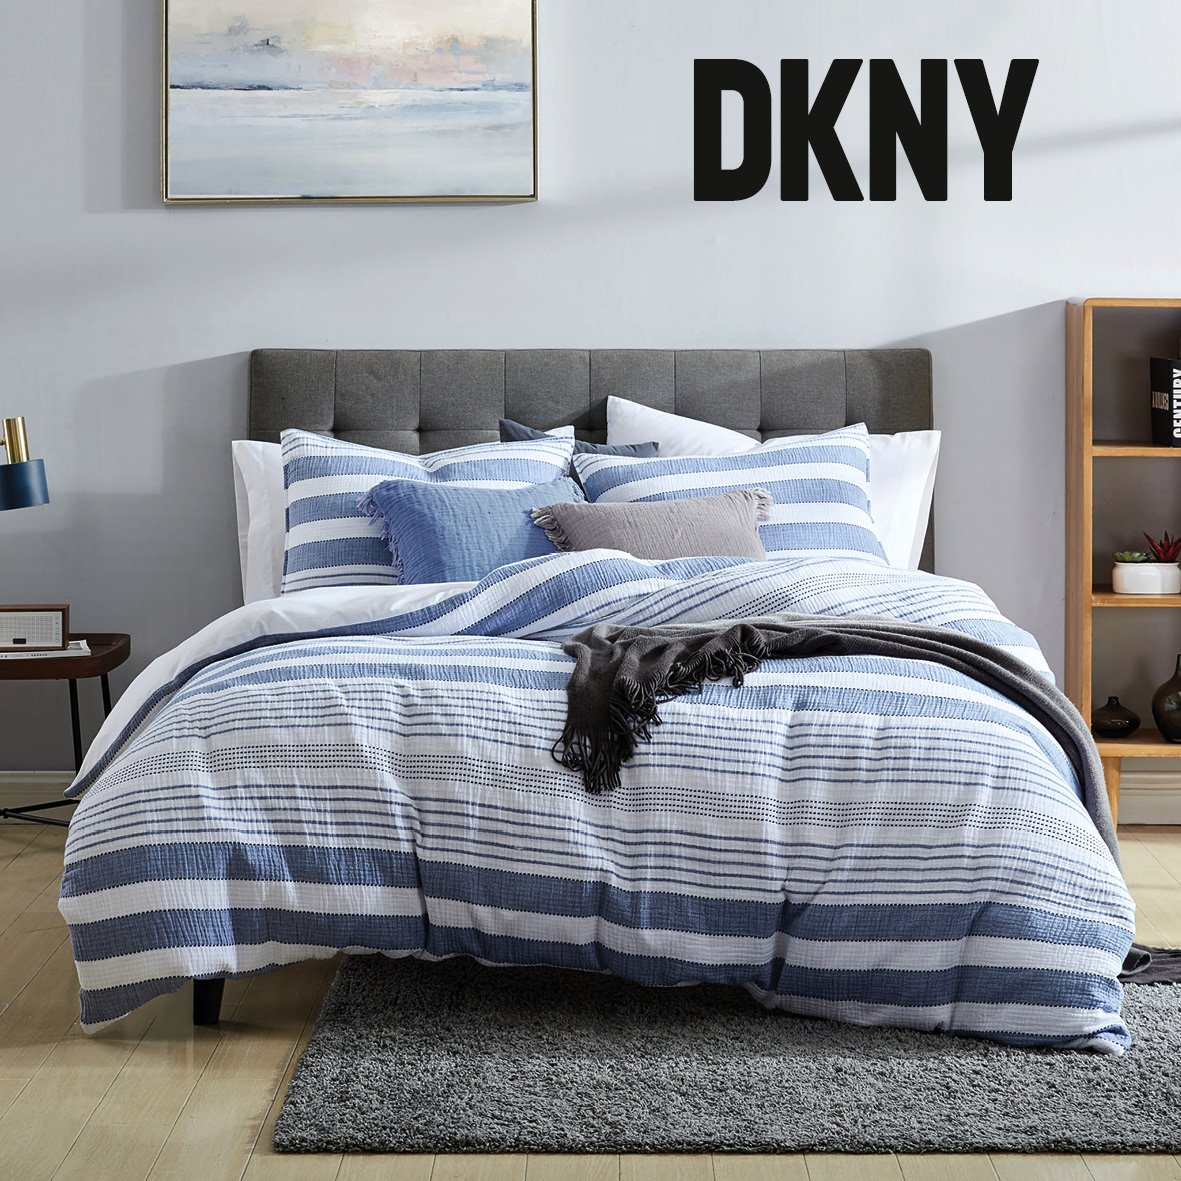 DKNY Comfy Stripe Bedding in Navy